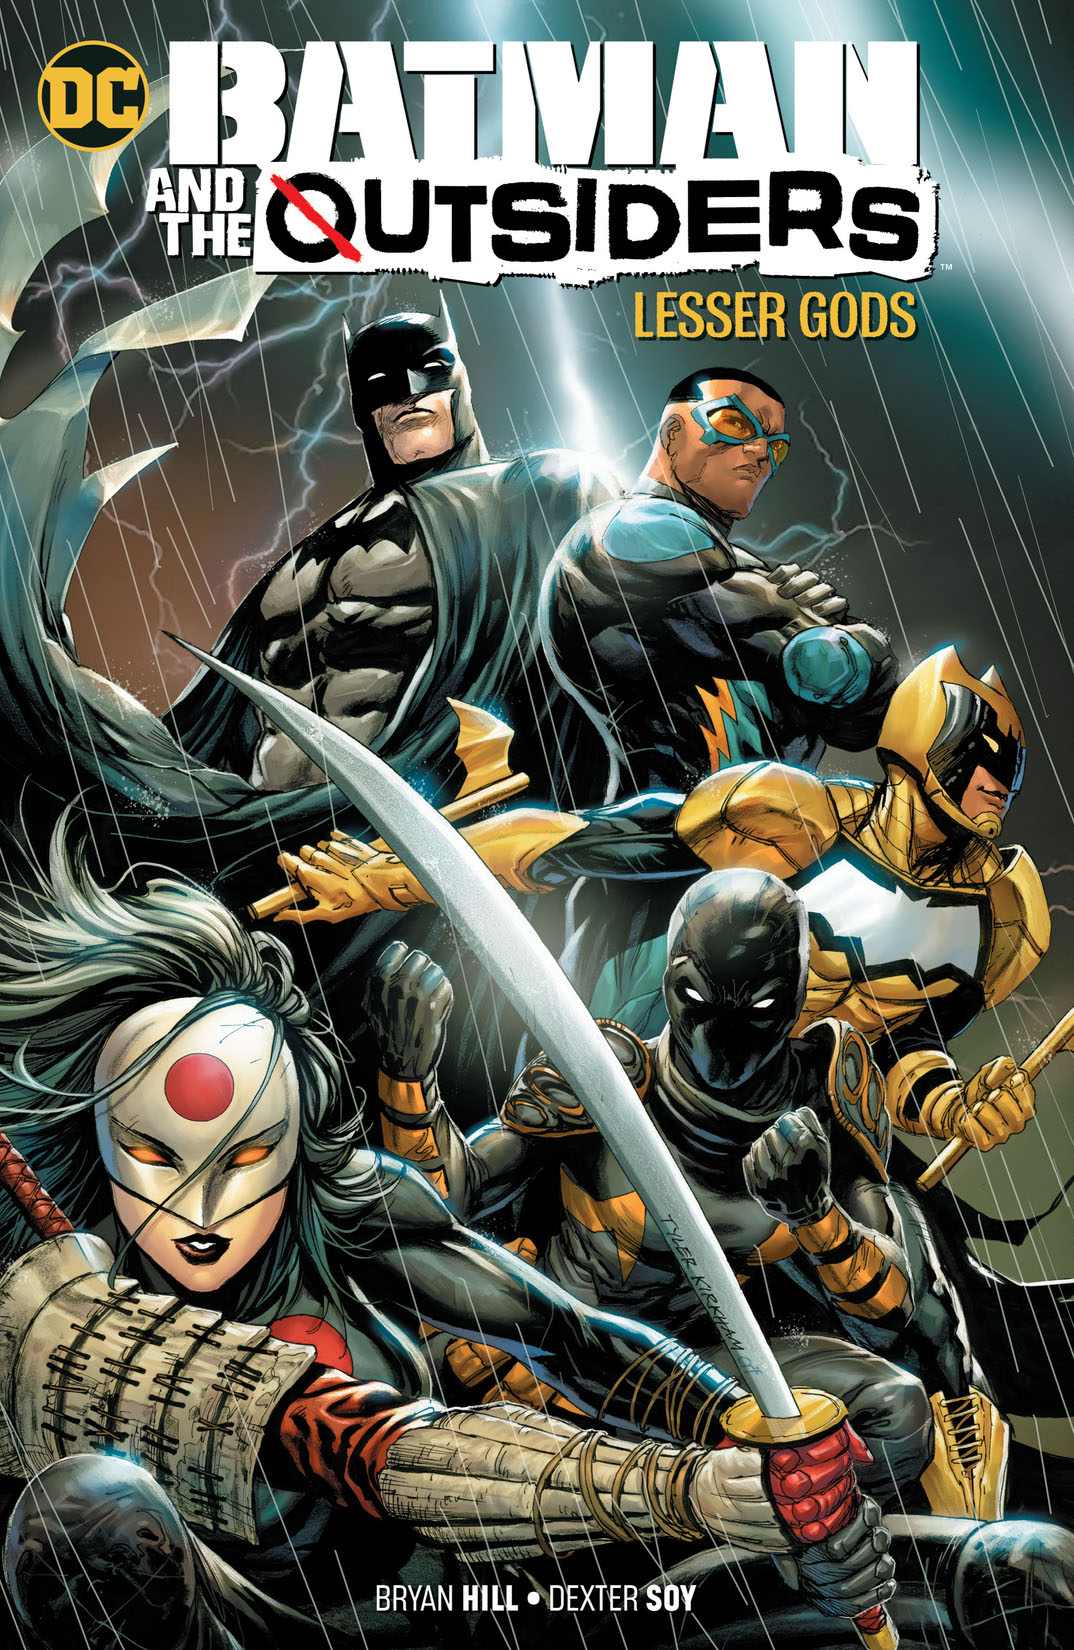 Batman & the Outsiders Vol. 1: Lesser Gods preview images